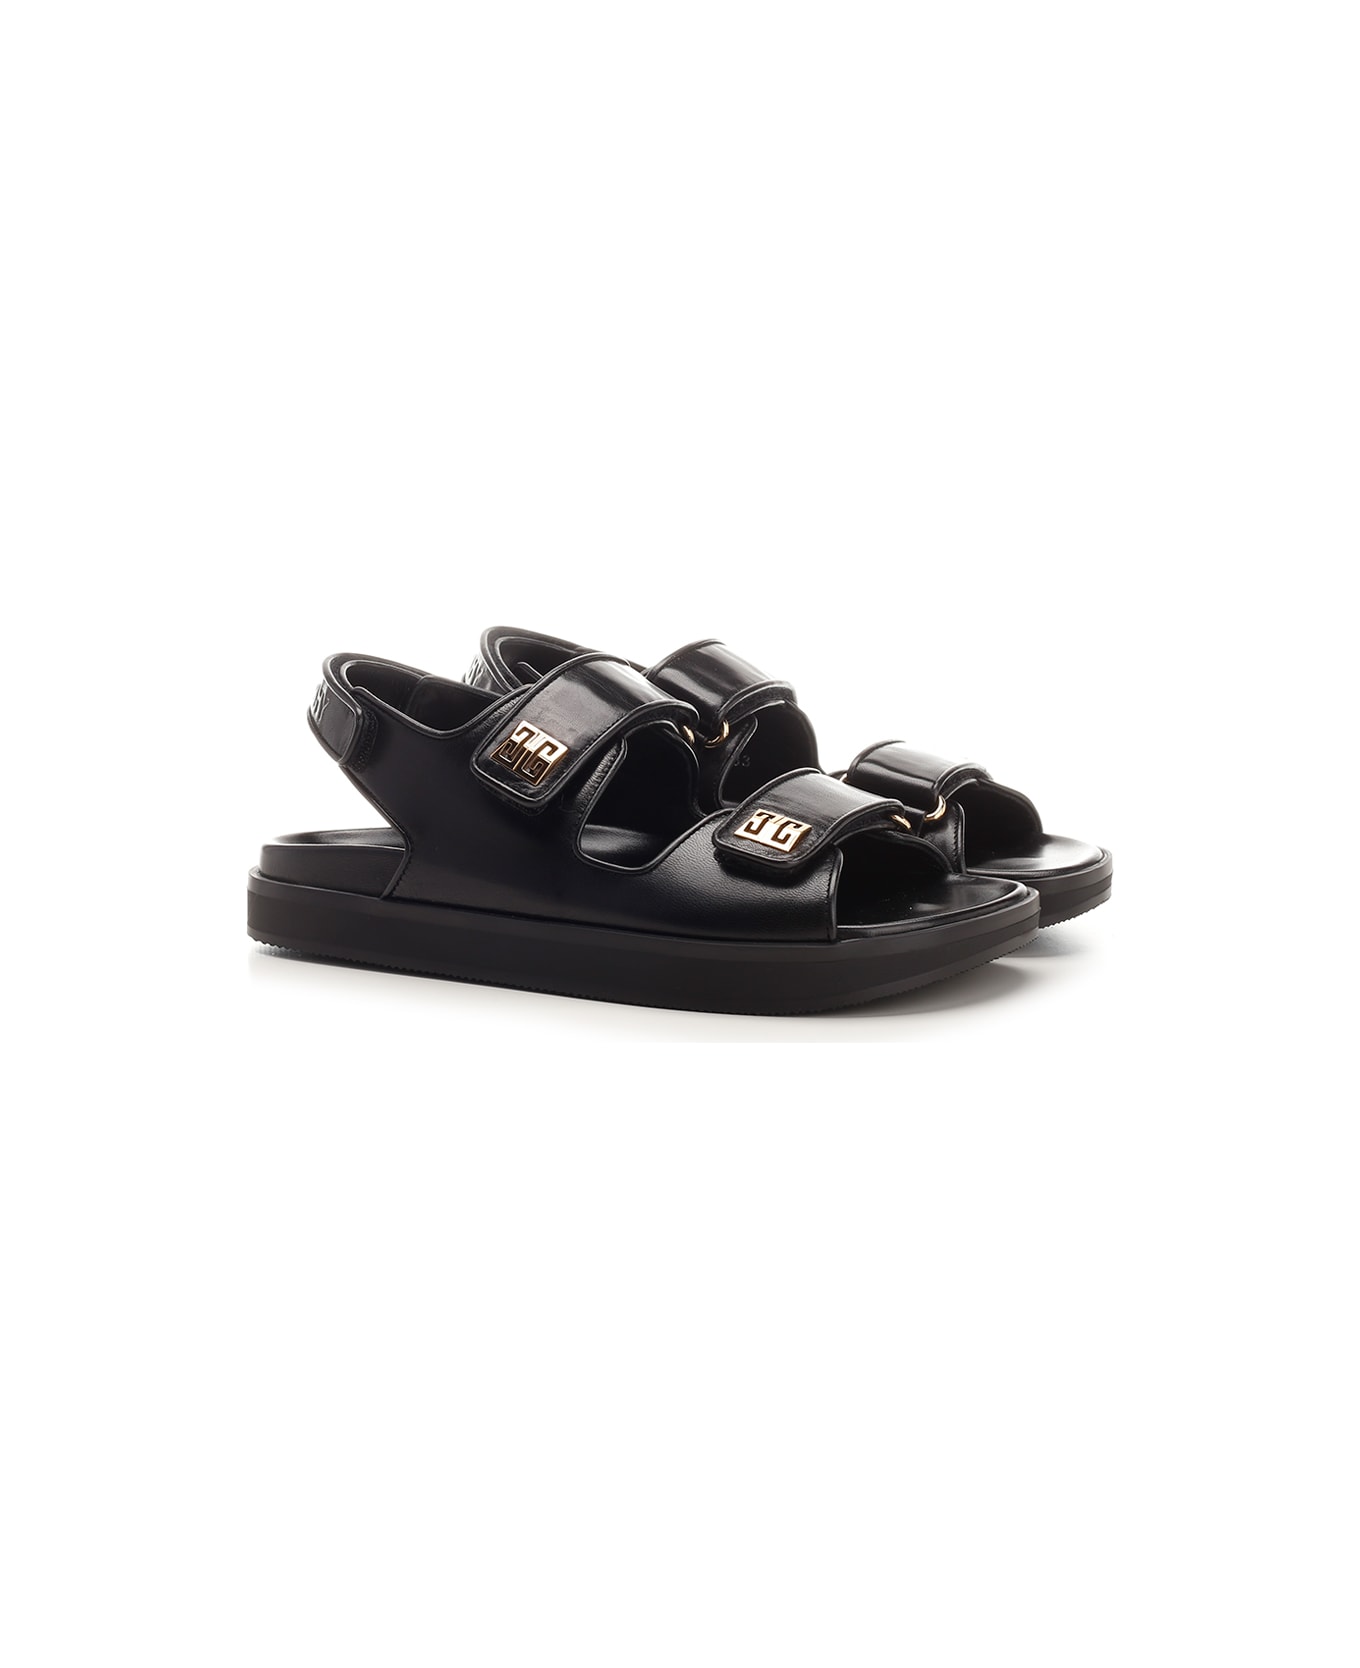 Givenchy 4g Sandal - Black